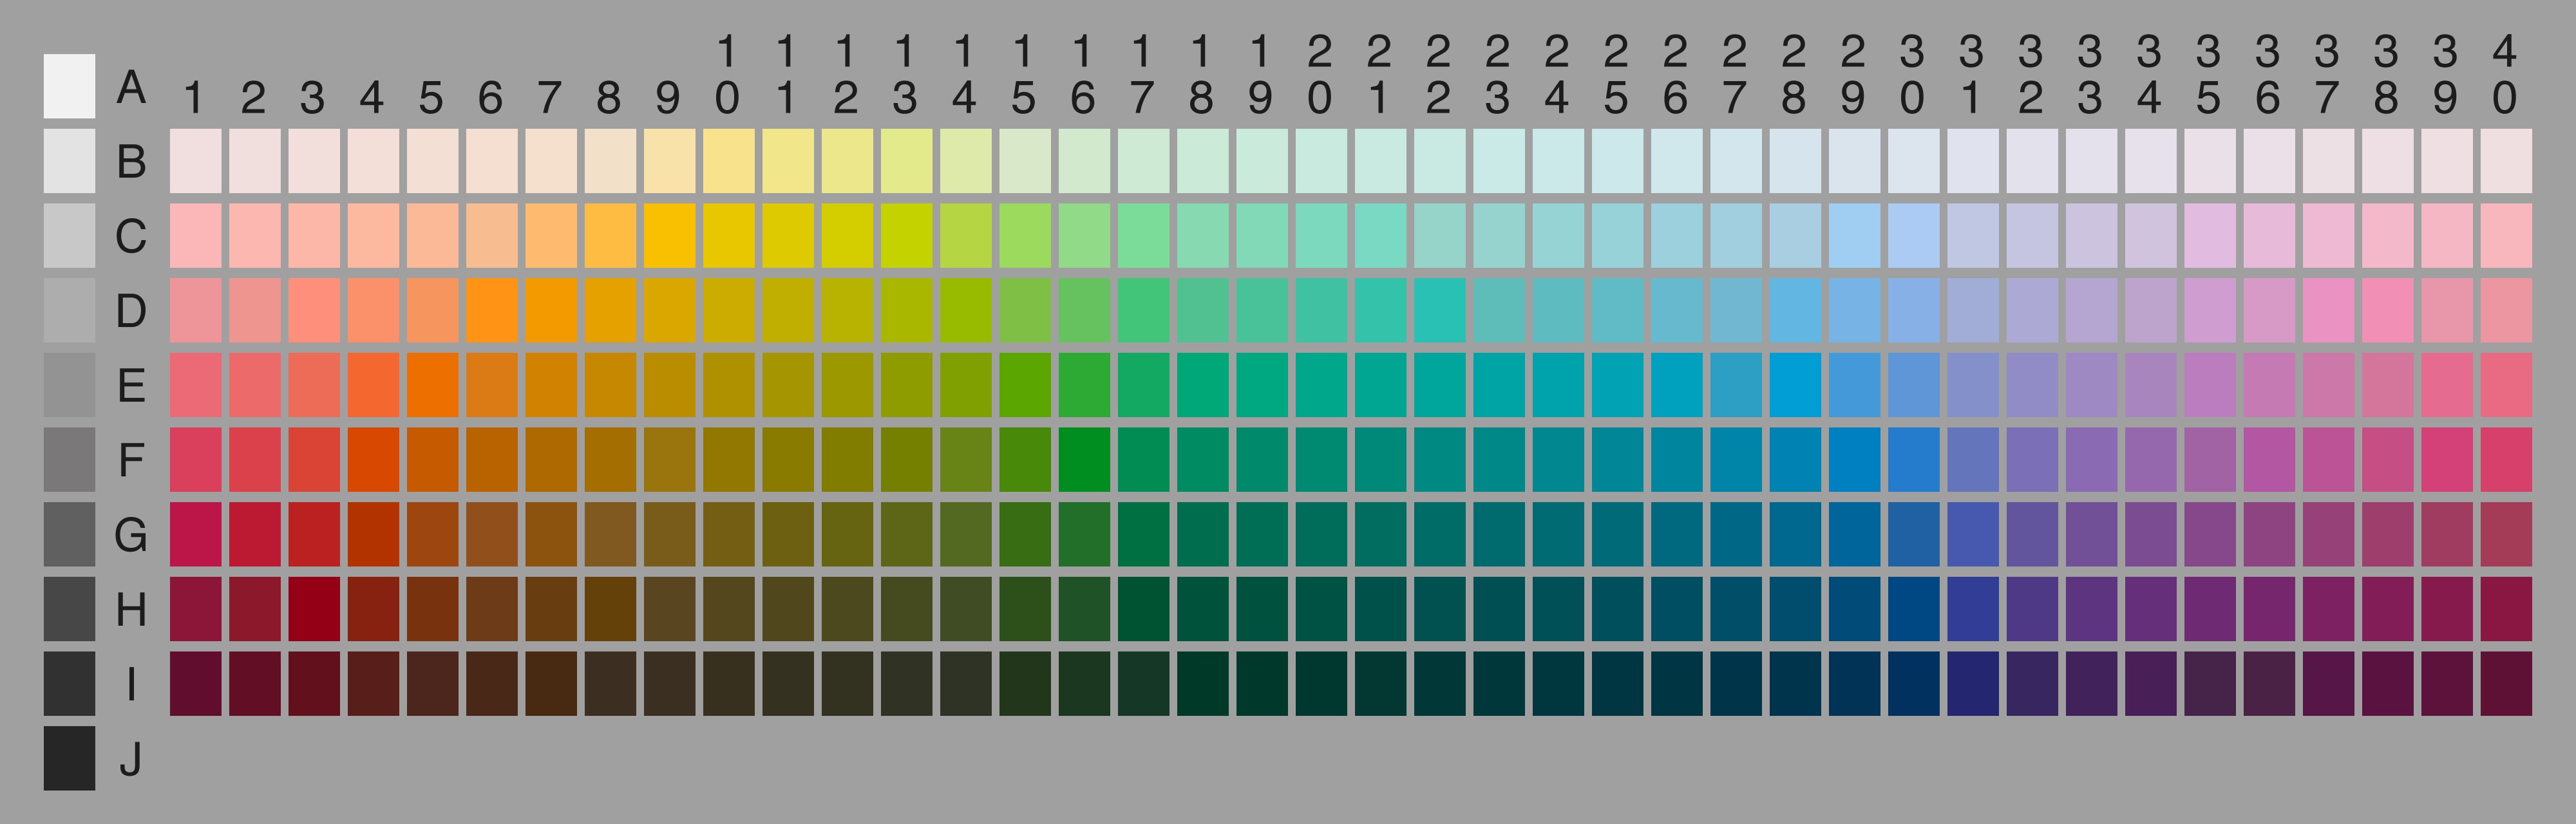 color classification